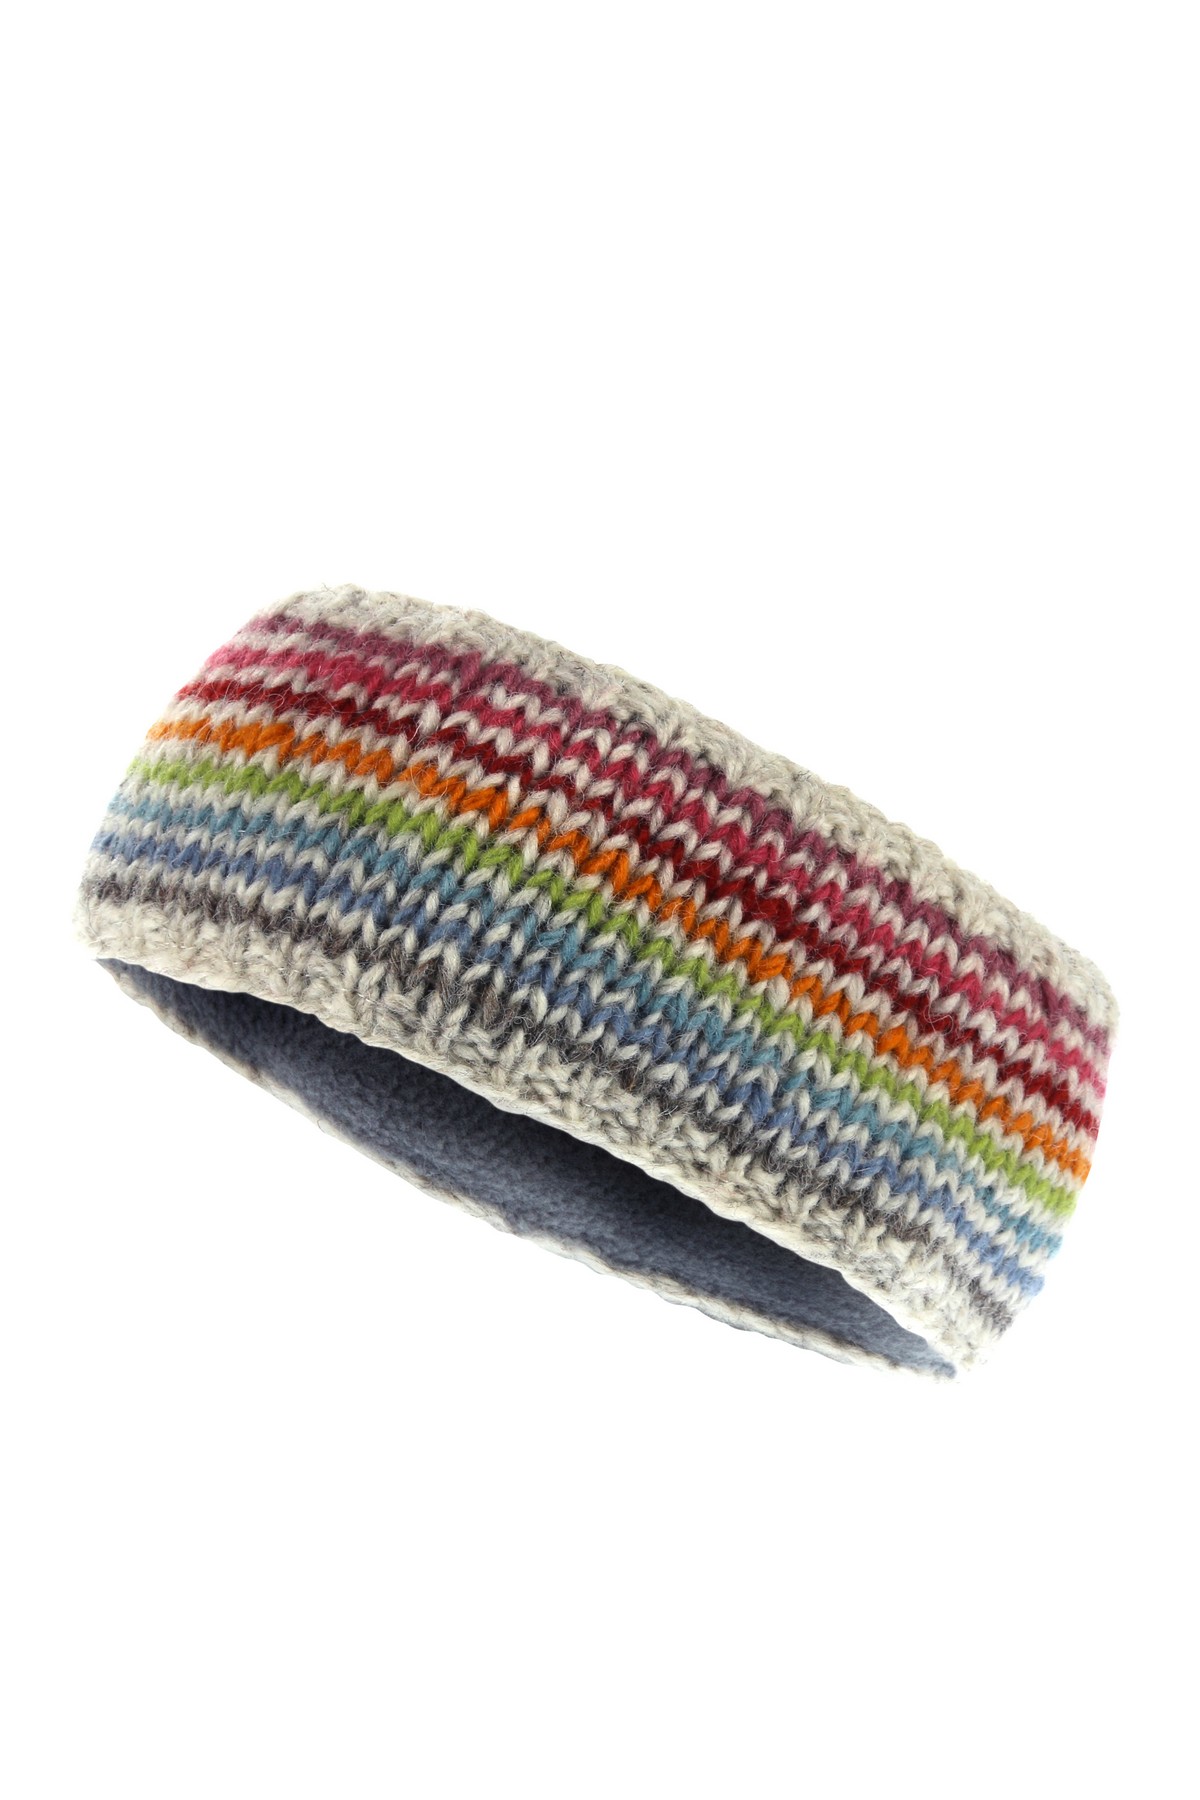 Pachamama Hoxton Stripe Headband